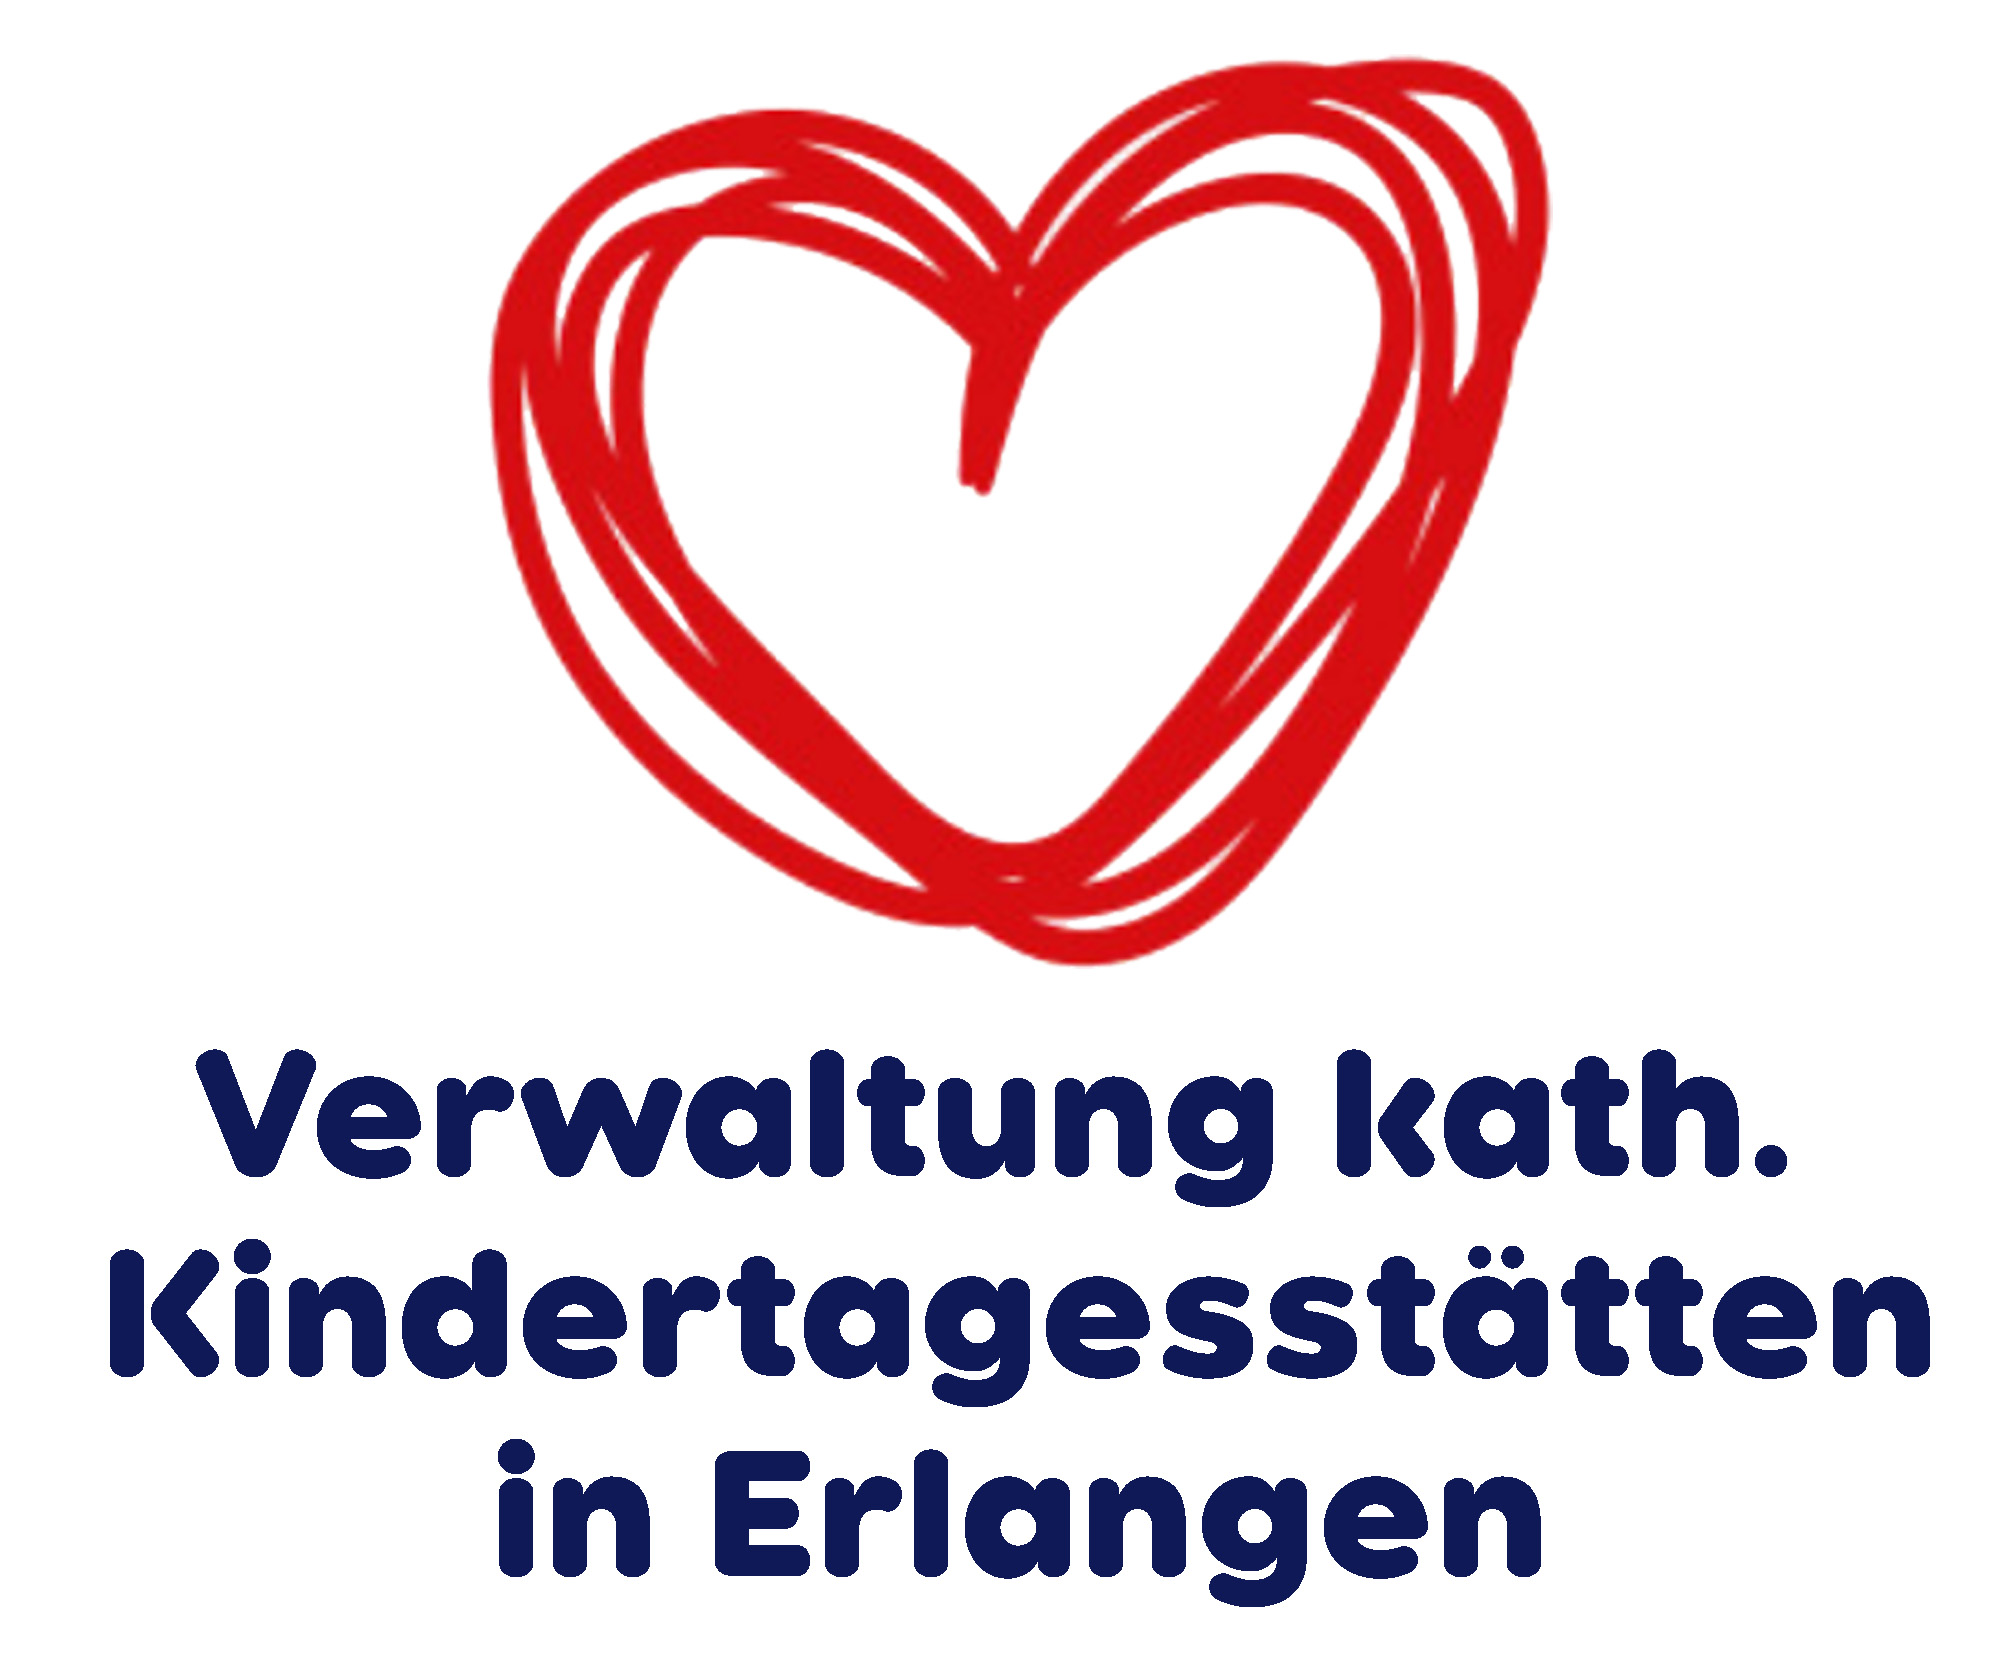 Logo Verwaltung